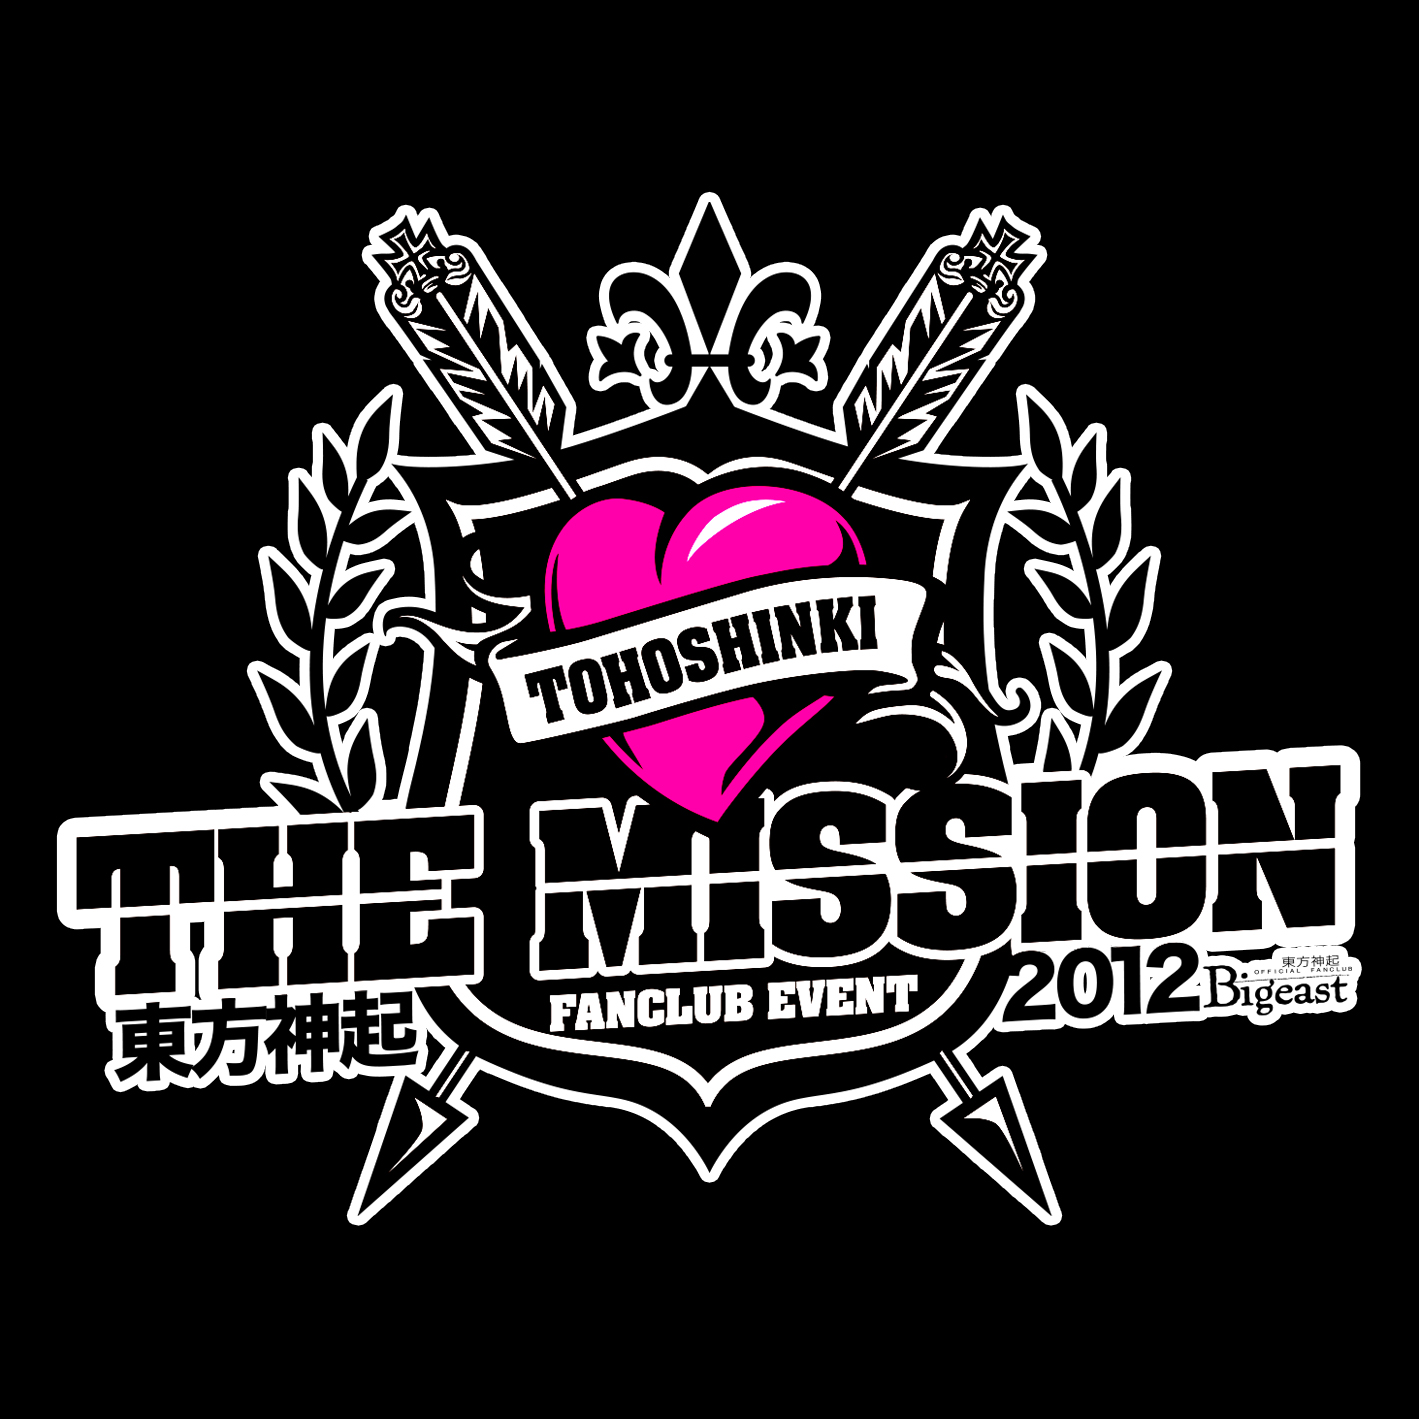 TOHOSHINKI Bigeast FANCLUB EVENT 2012 「THE MISSION」LOGO